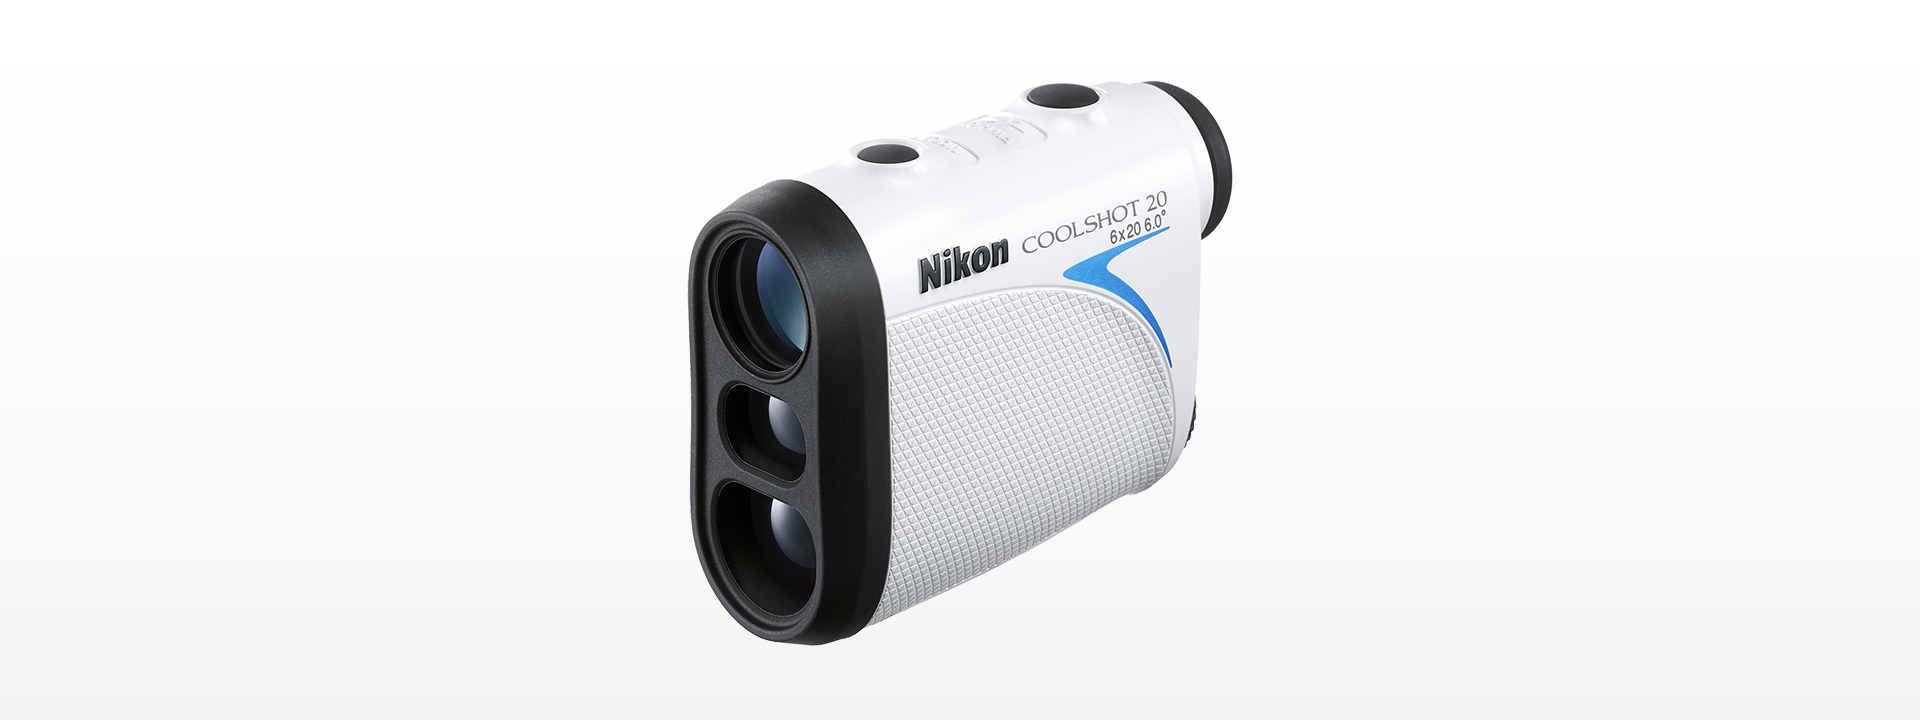 Nikon COOLSHOT20.ニコンクールショット20距離計 - アクセサリー